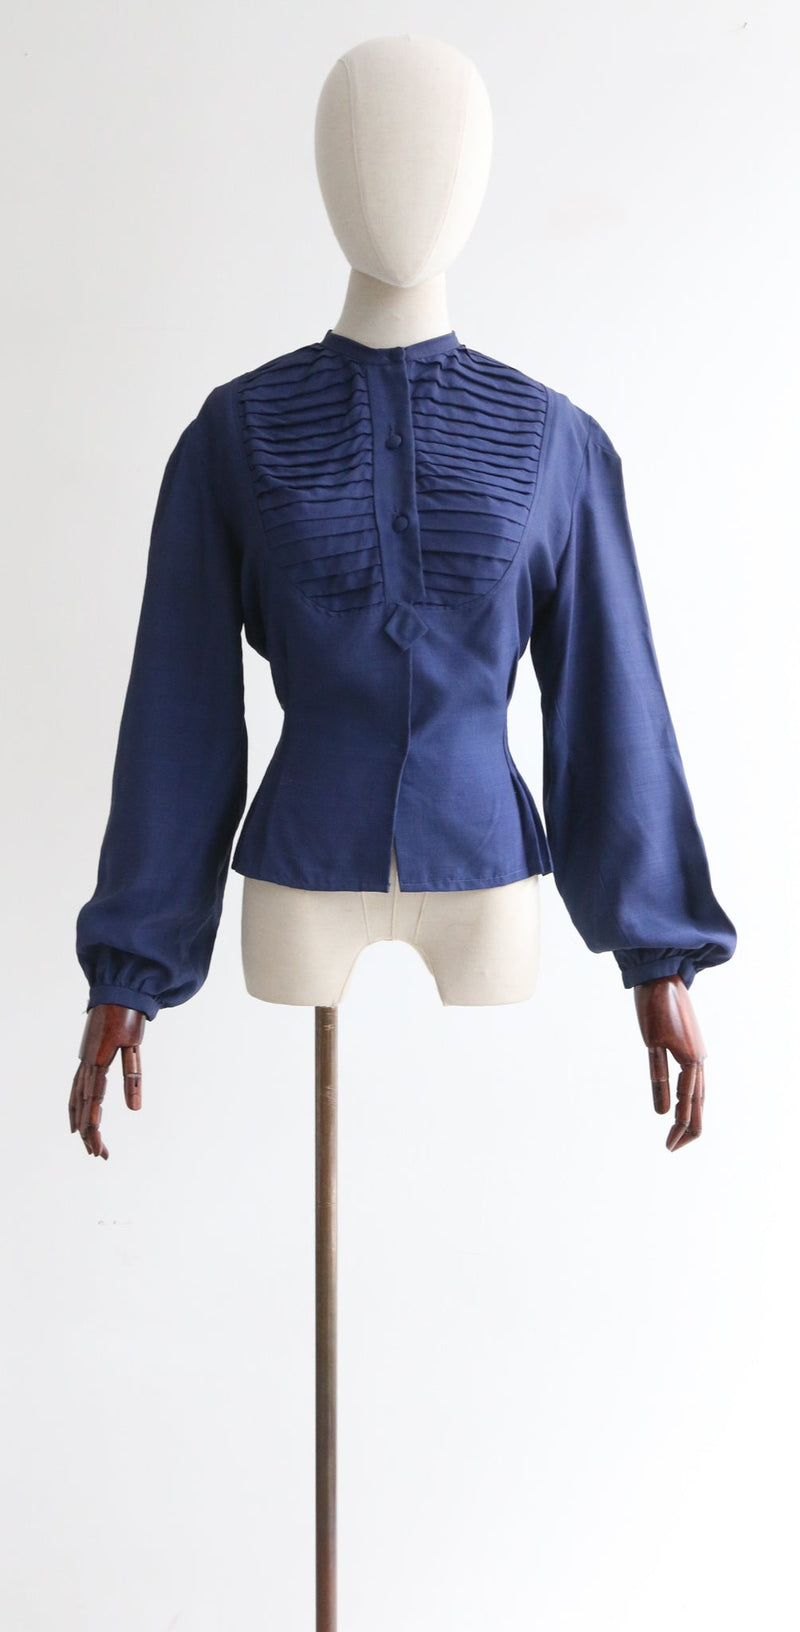 "Navy Pleats" Vintage 1950's Silk Pleated Blouse UK 10 US 6